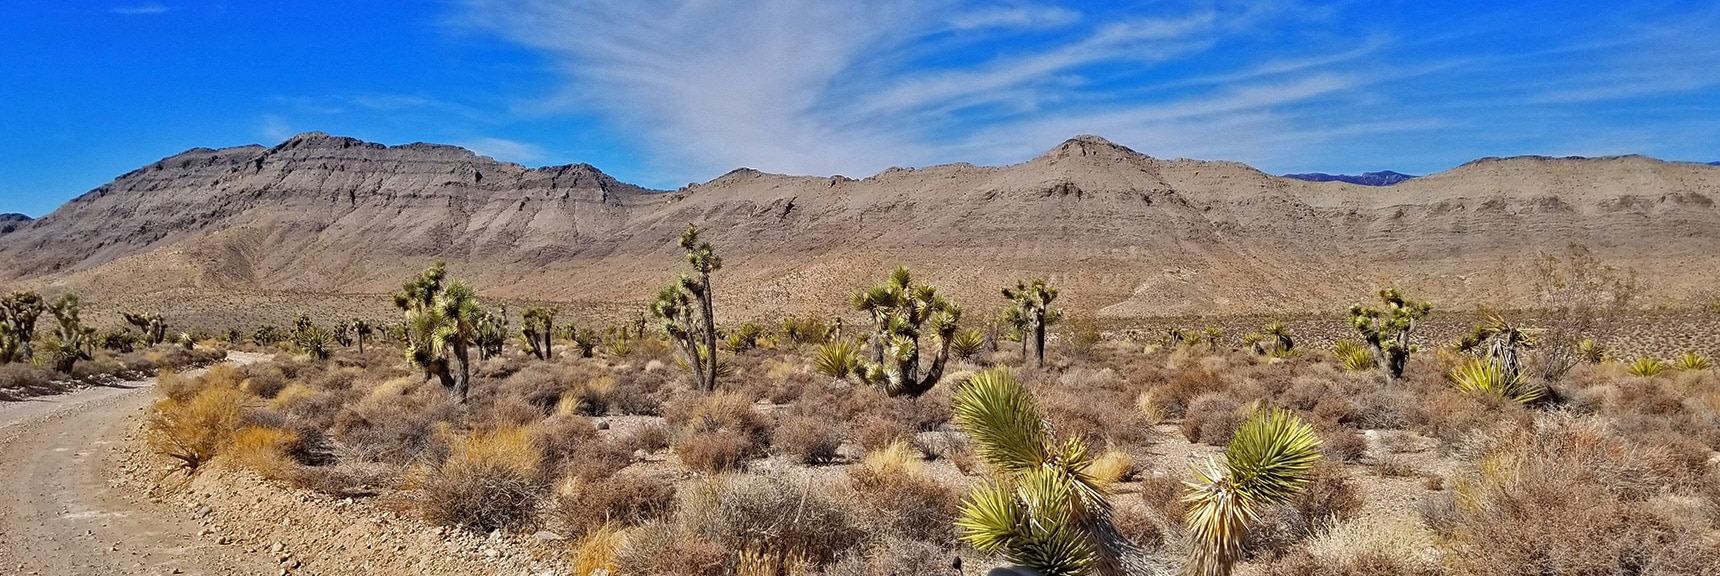 Fossil Ridge Viewed from Gass Peak Road Near Trailhead | Gass Peak Road Circuit | Desert National Wildlife Refuge | Nevada